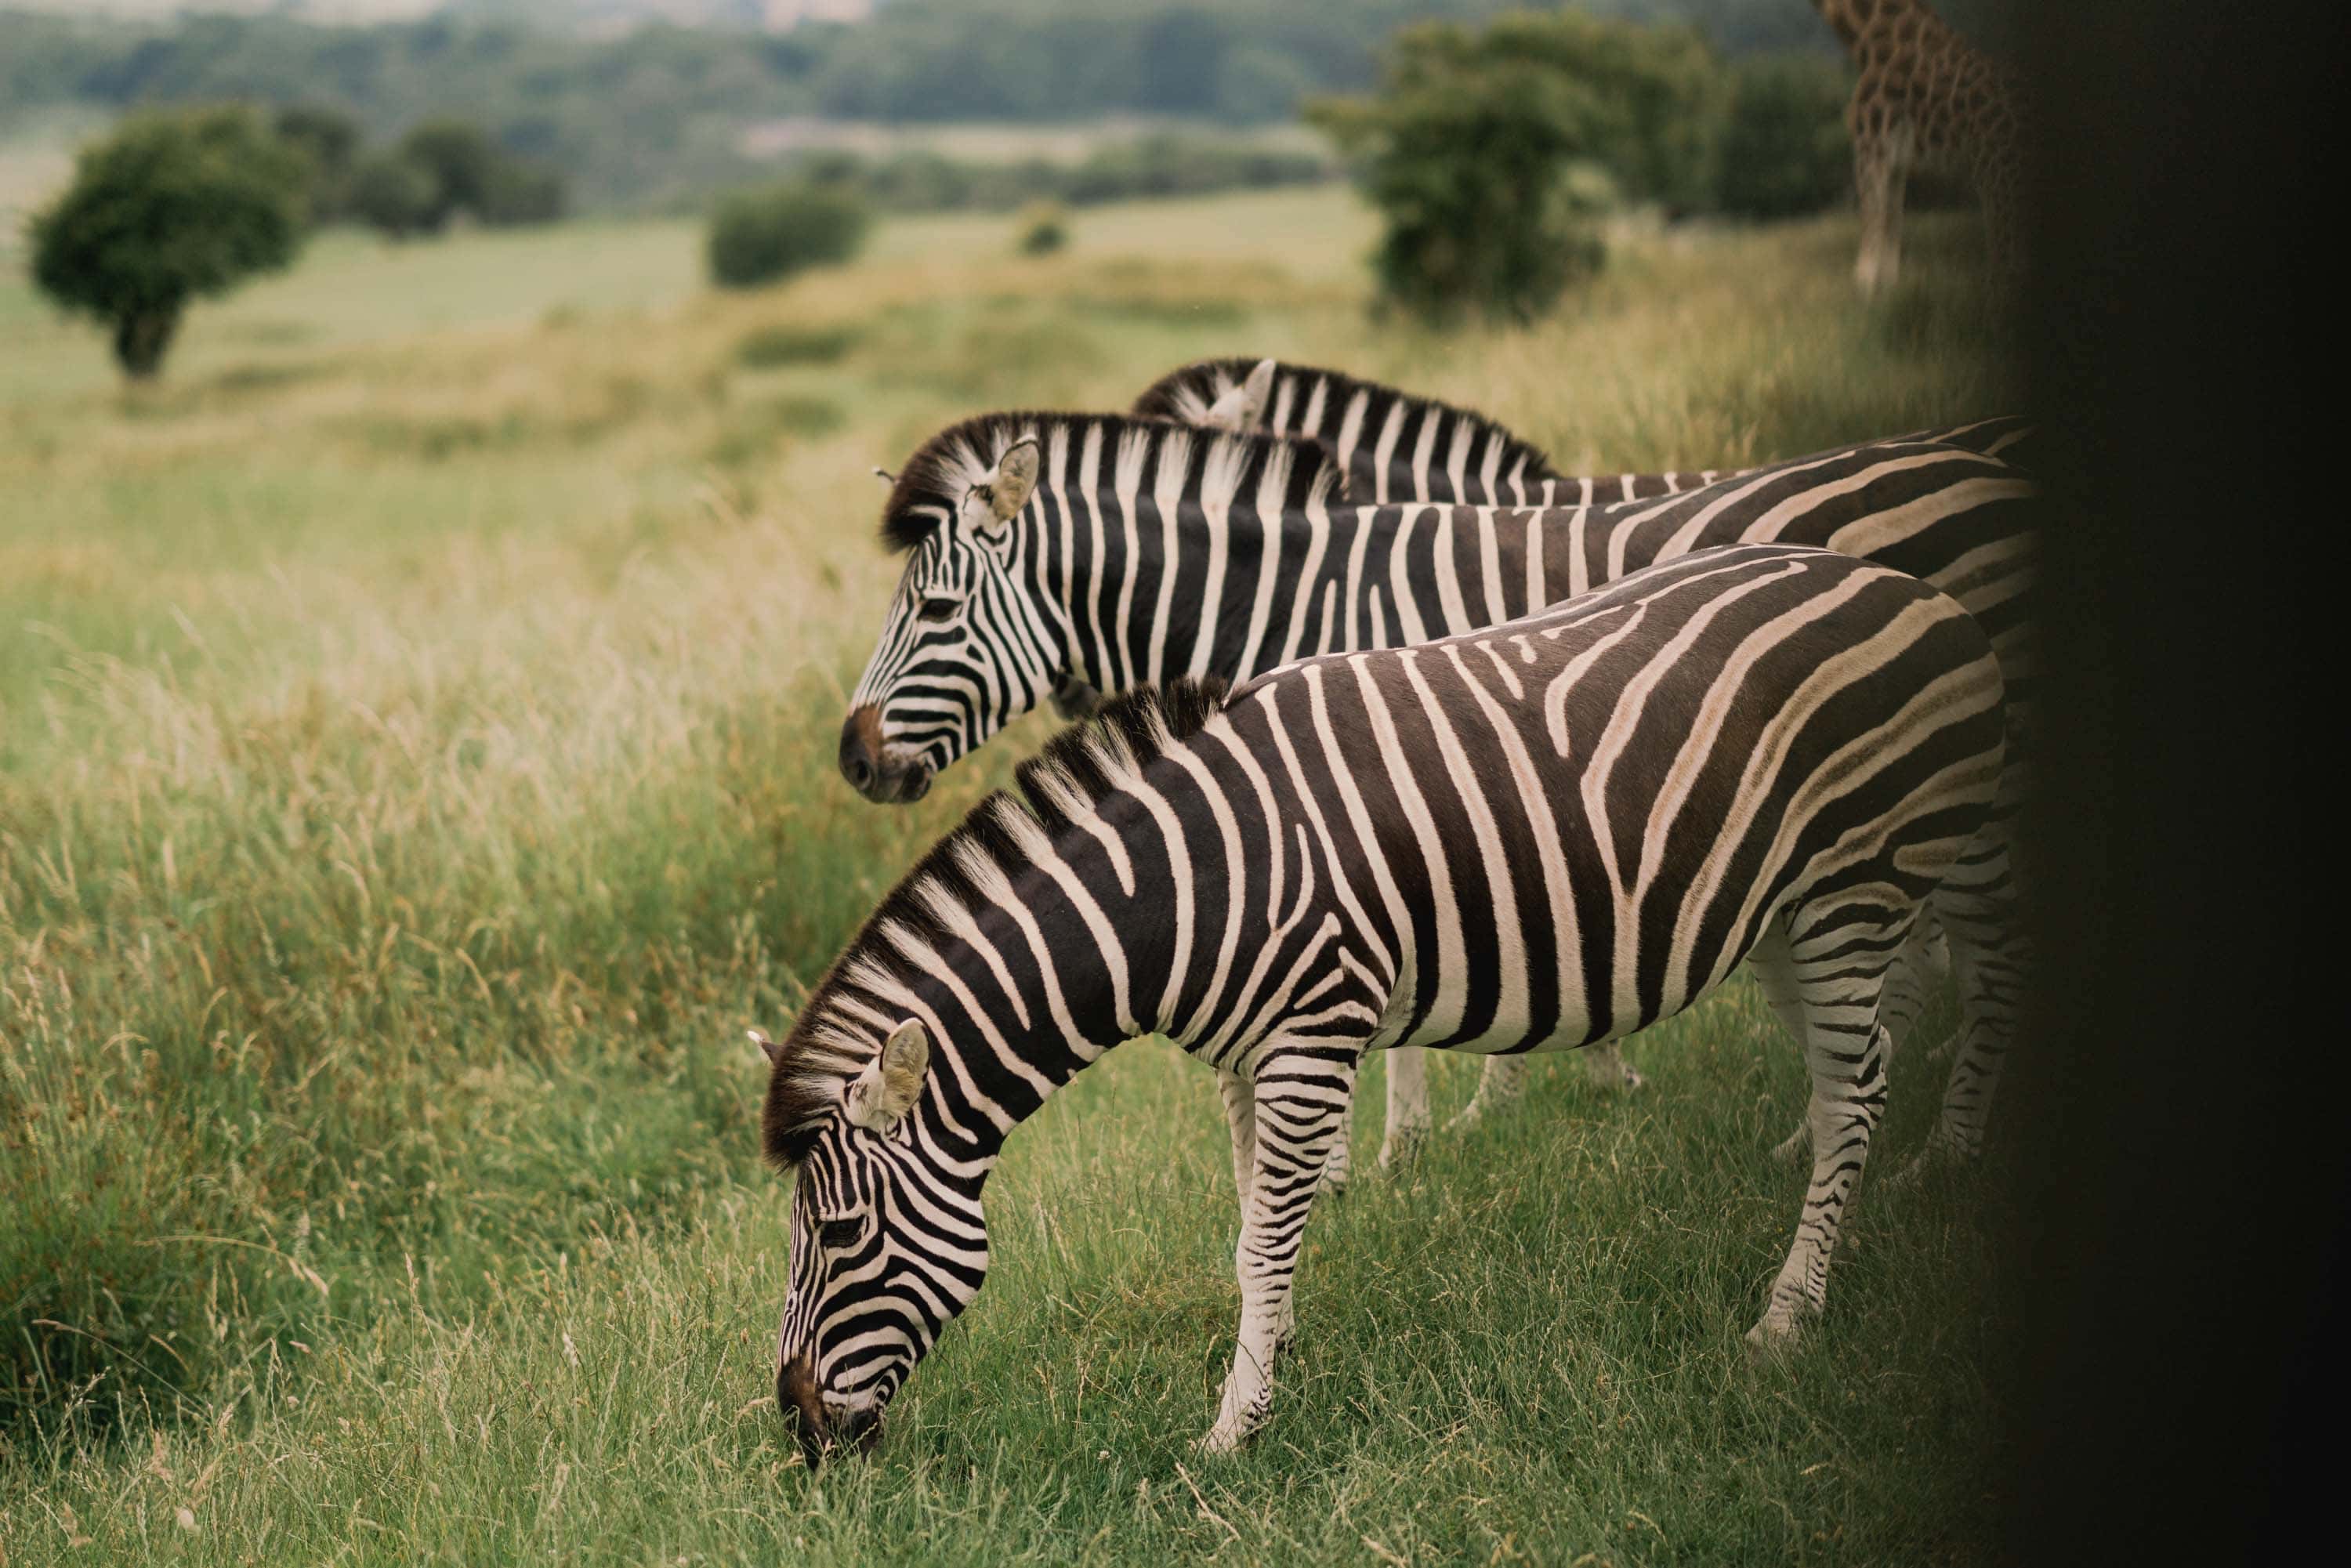 Zebra at Port Lympne Safari Park in Kent.